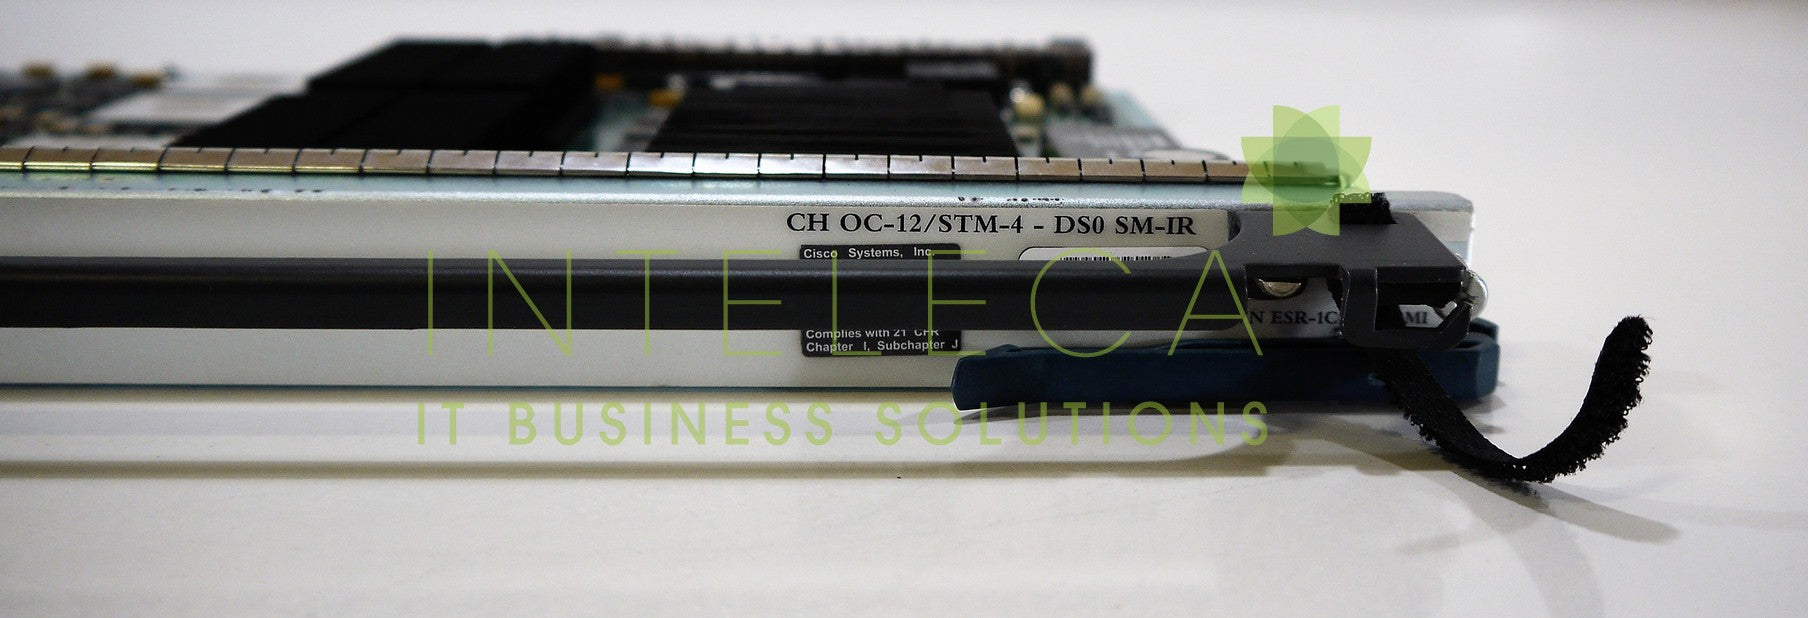 CISCO ESR-1COC12-SMI 1 pt ChOC12 (STS12) line card,